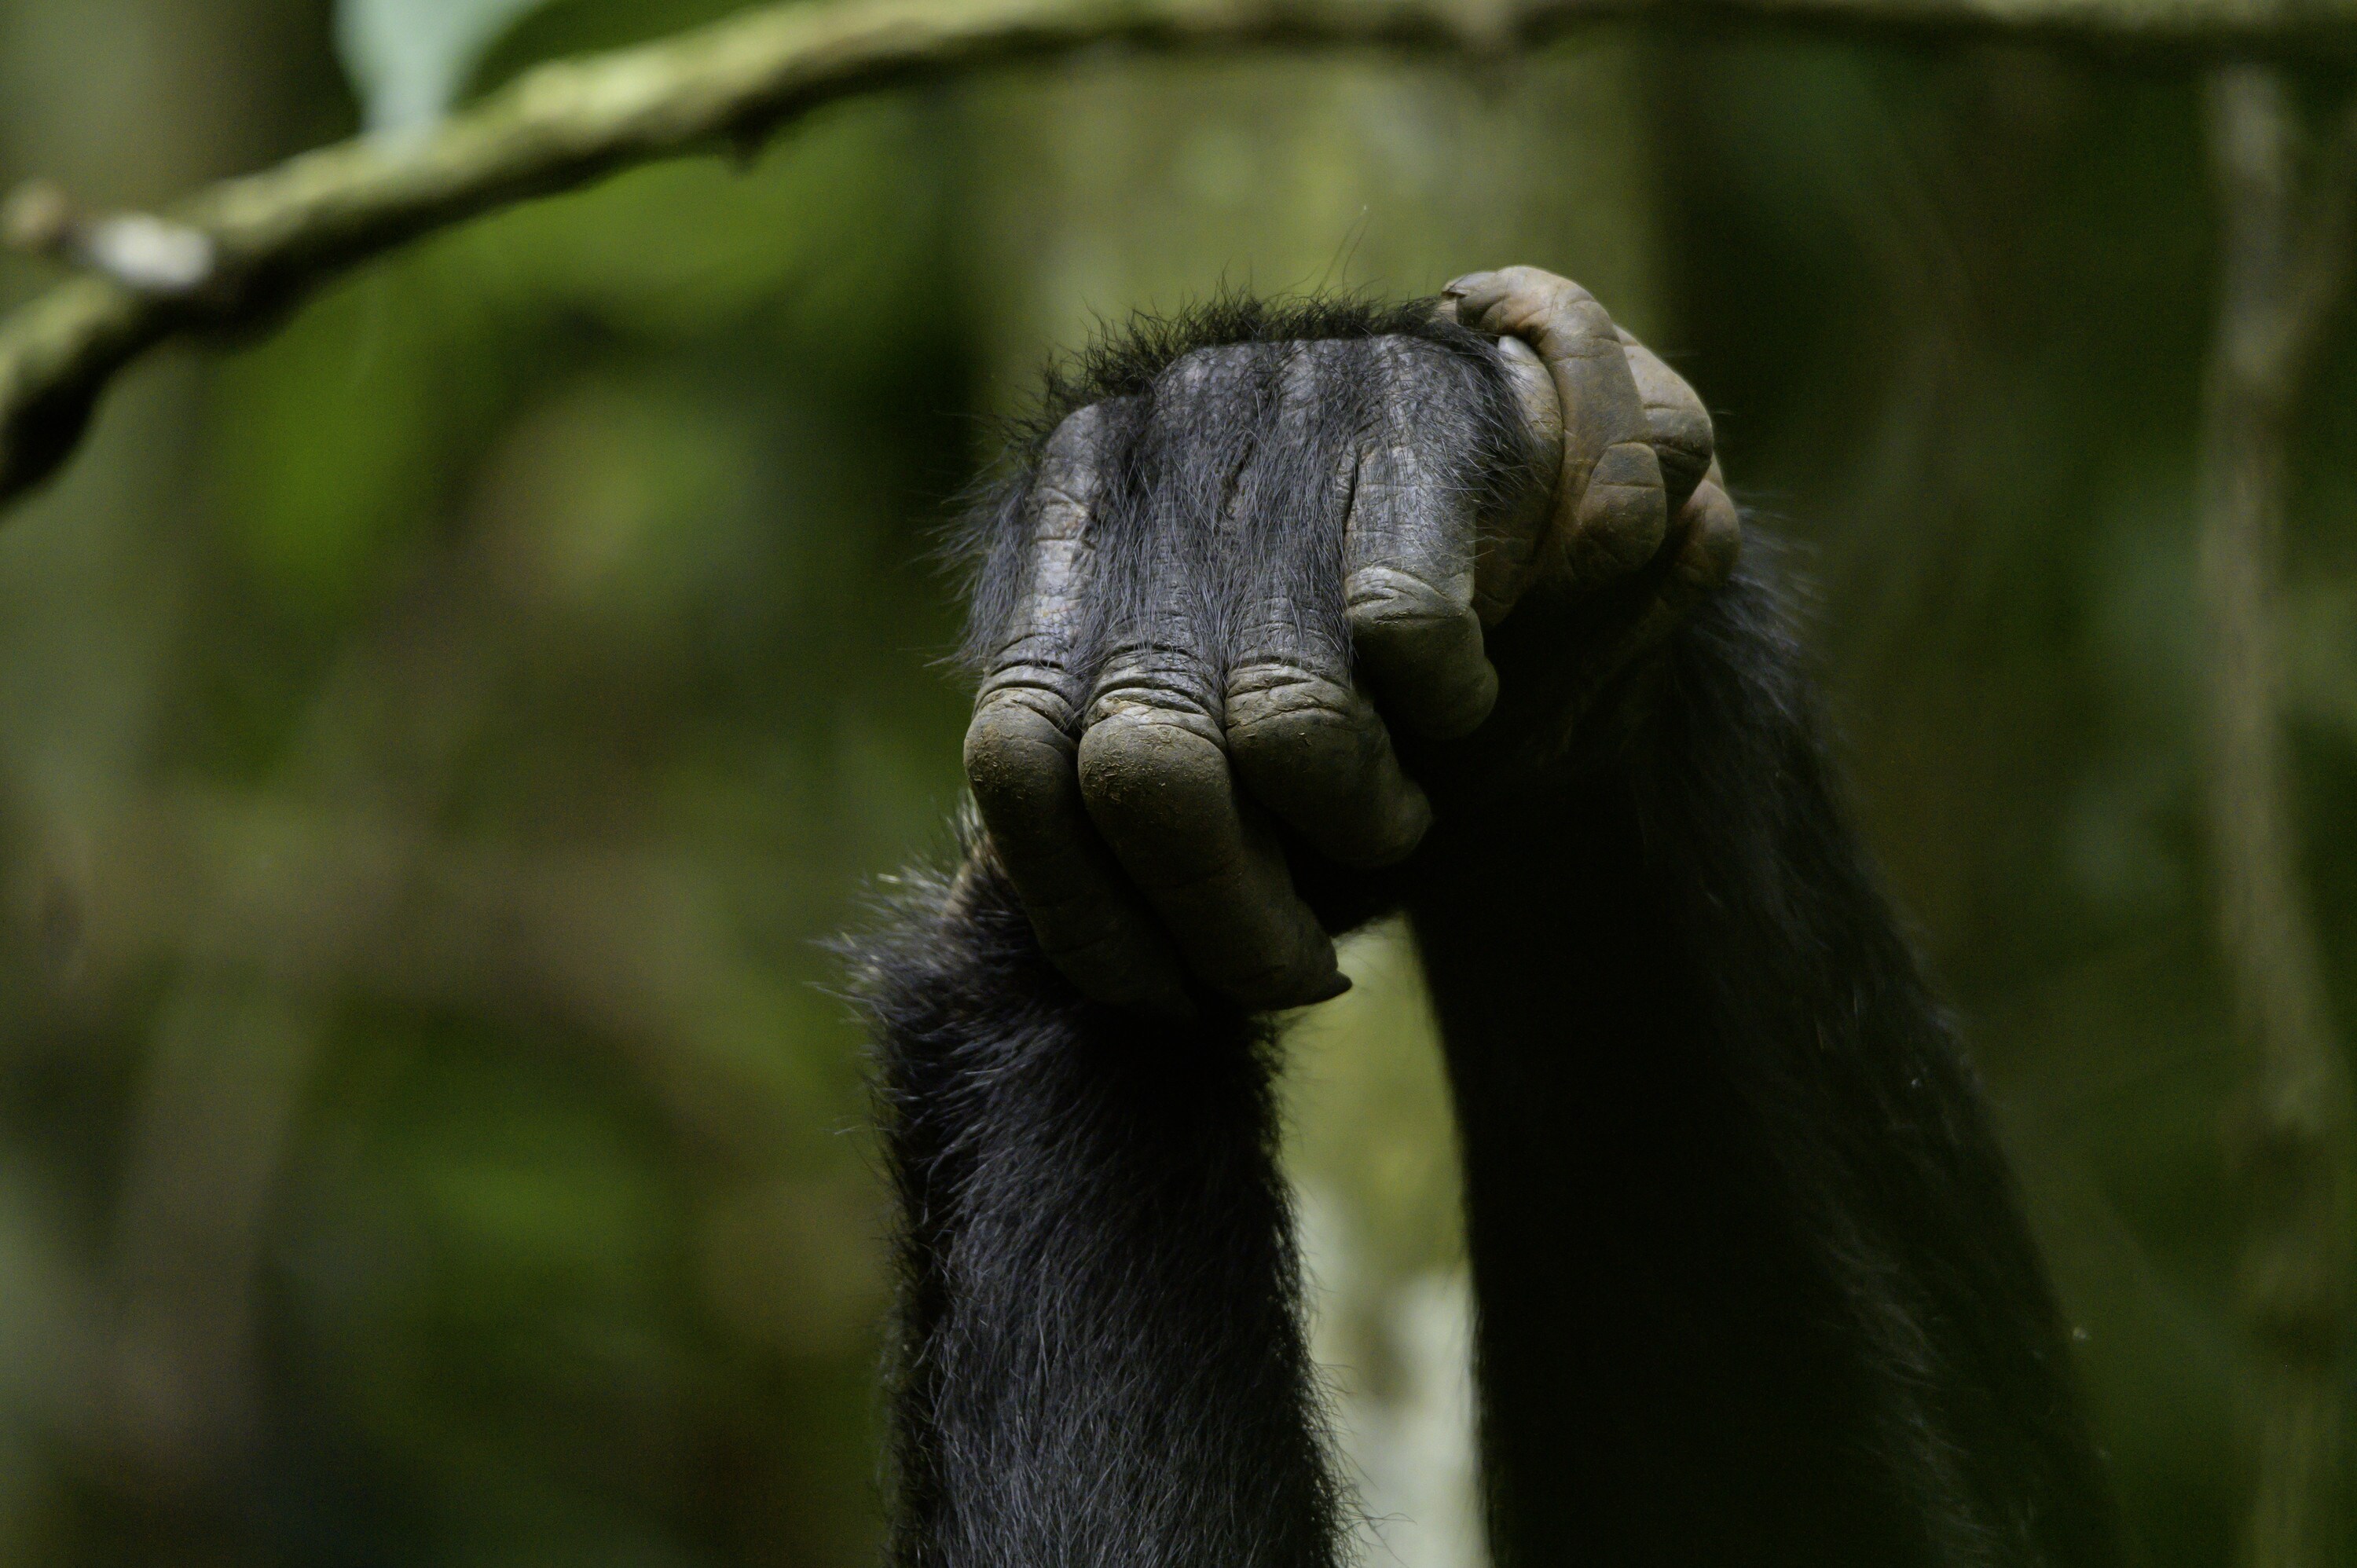 chimpanzee hand clasp